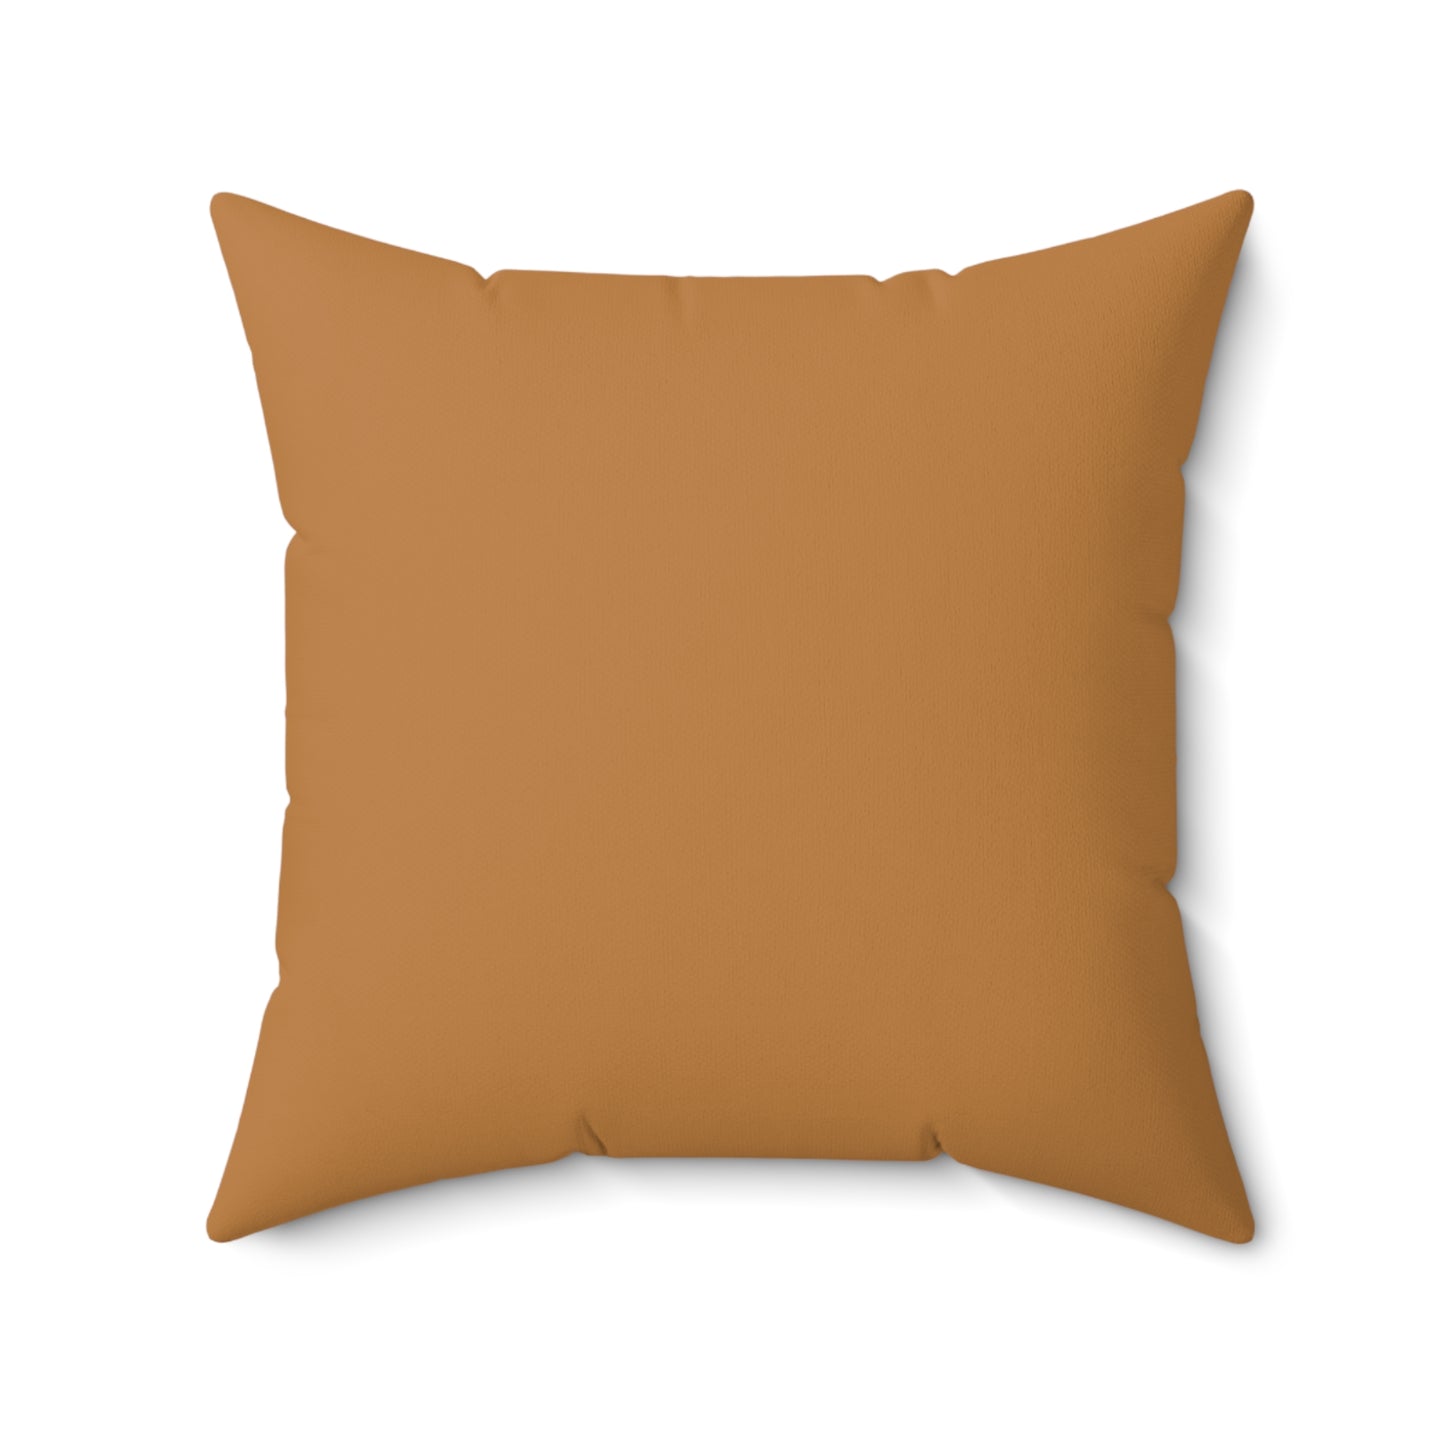 Copy of Spun Polyester Square Pillow